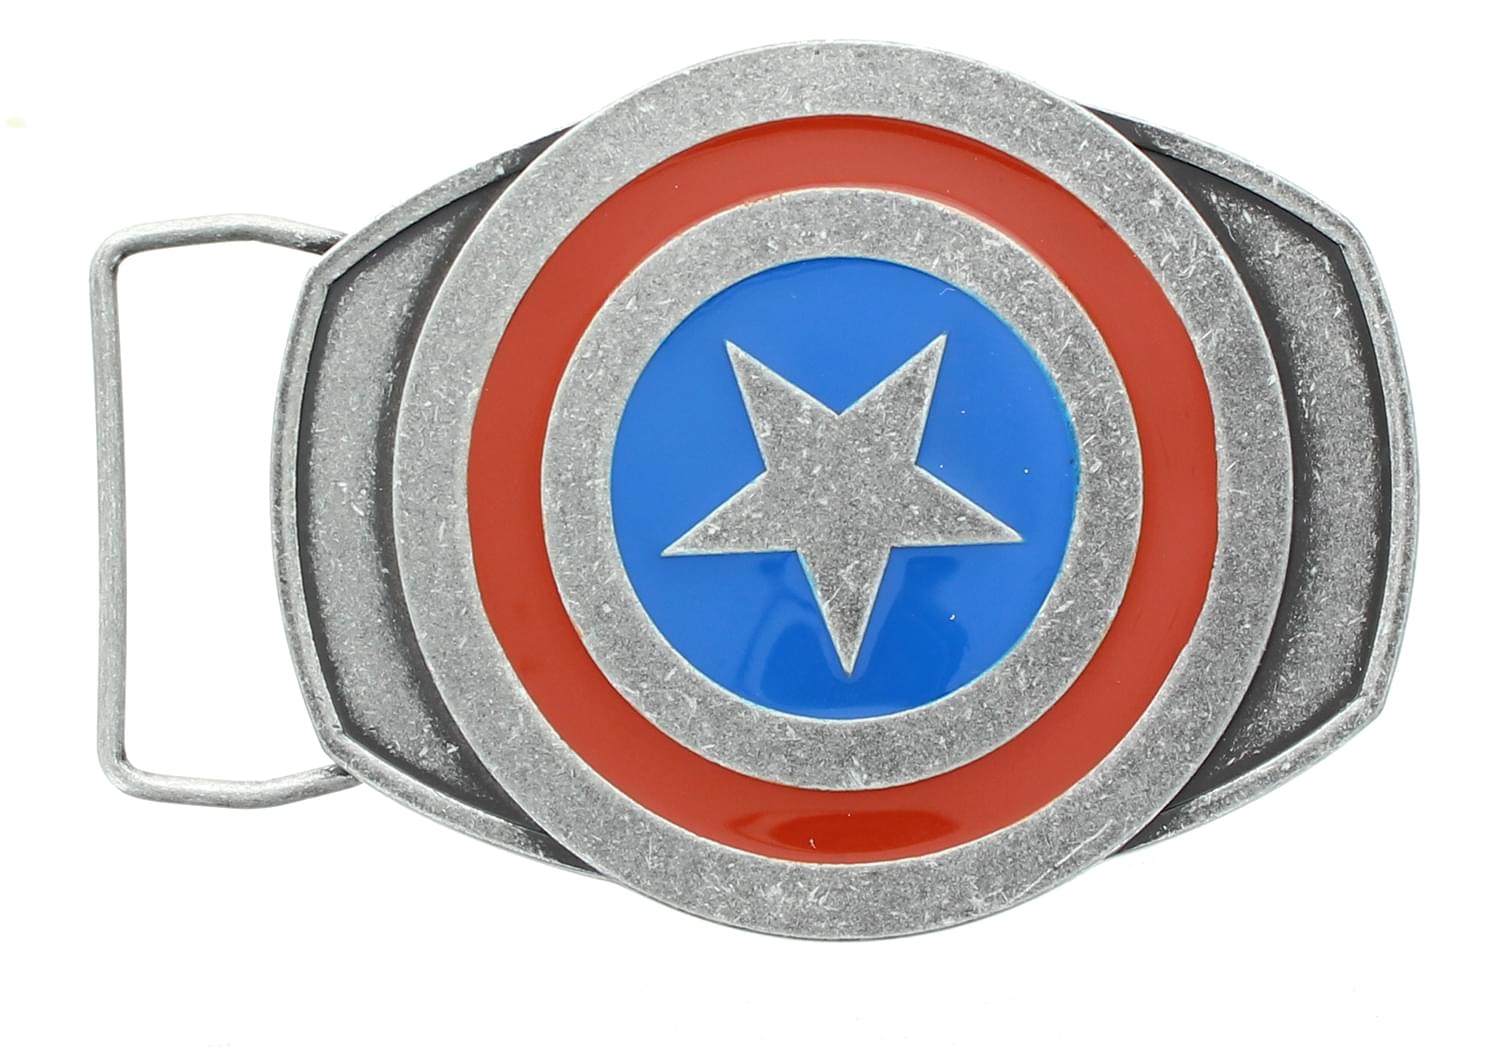 Captain America Belt Buckle